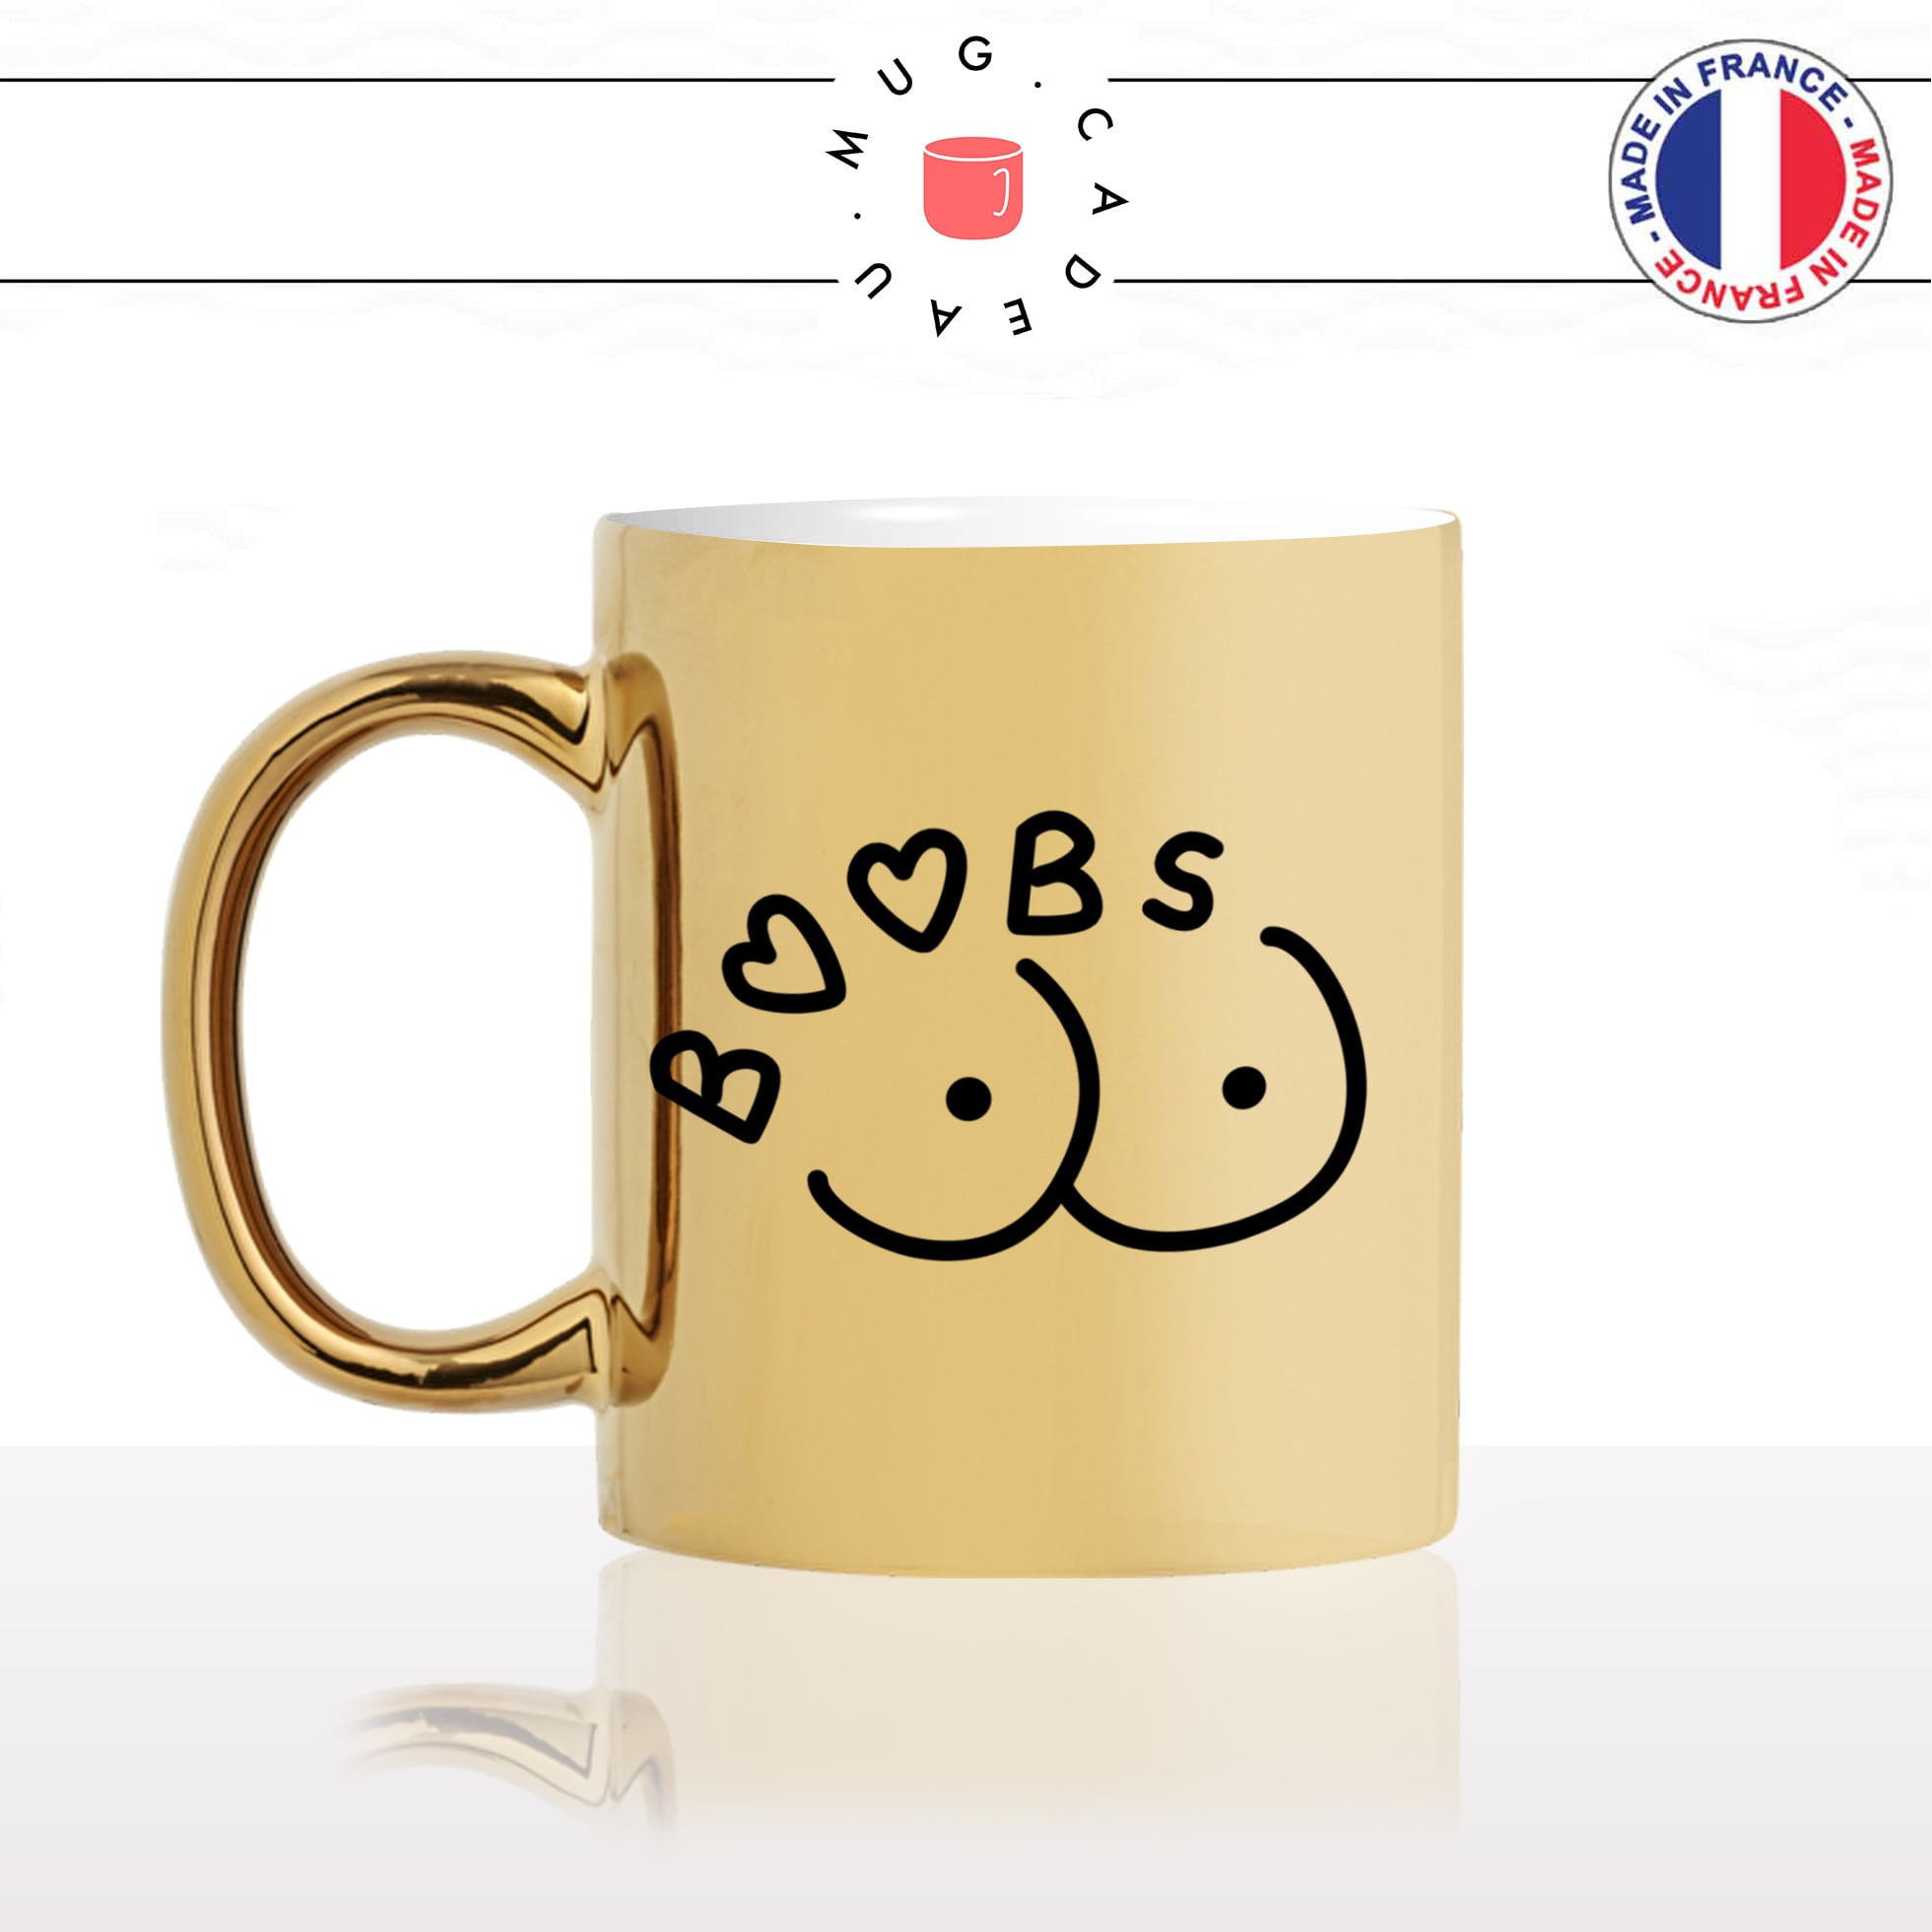 mug-tasse-doré-or-gold-boobs-seins-feministe-amour-self-love-femme-couple-humour-fun-idée-cadeau-personnalisé-café-thé-min